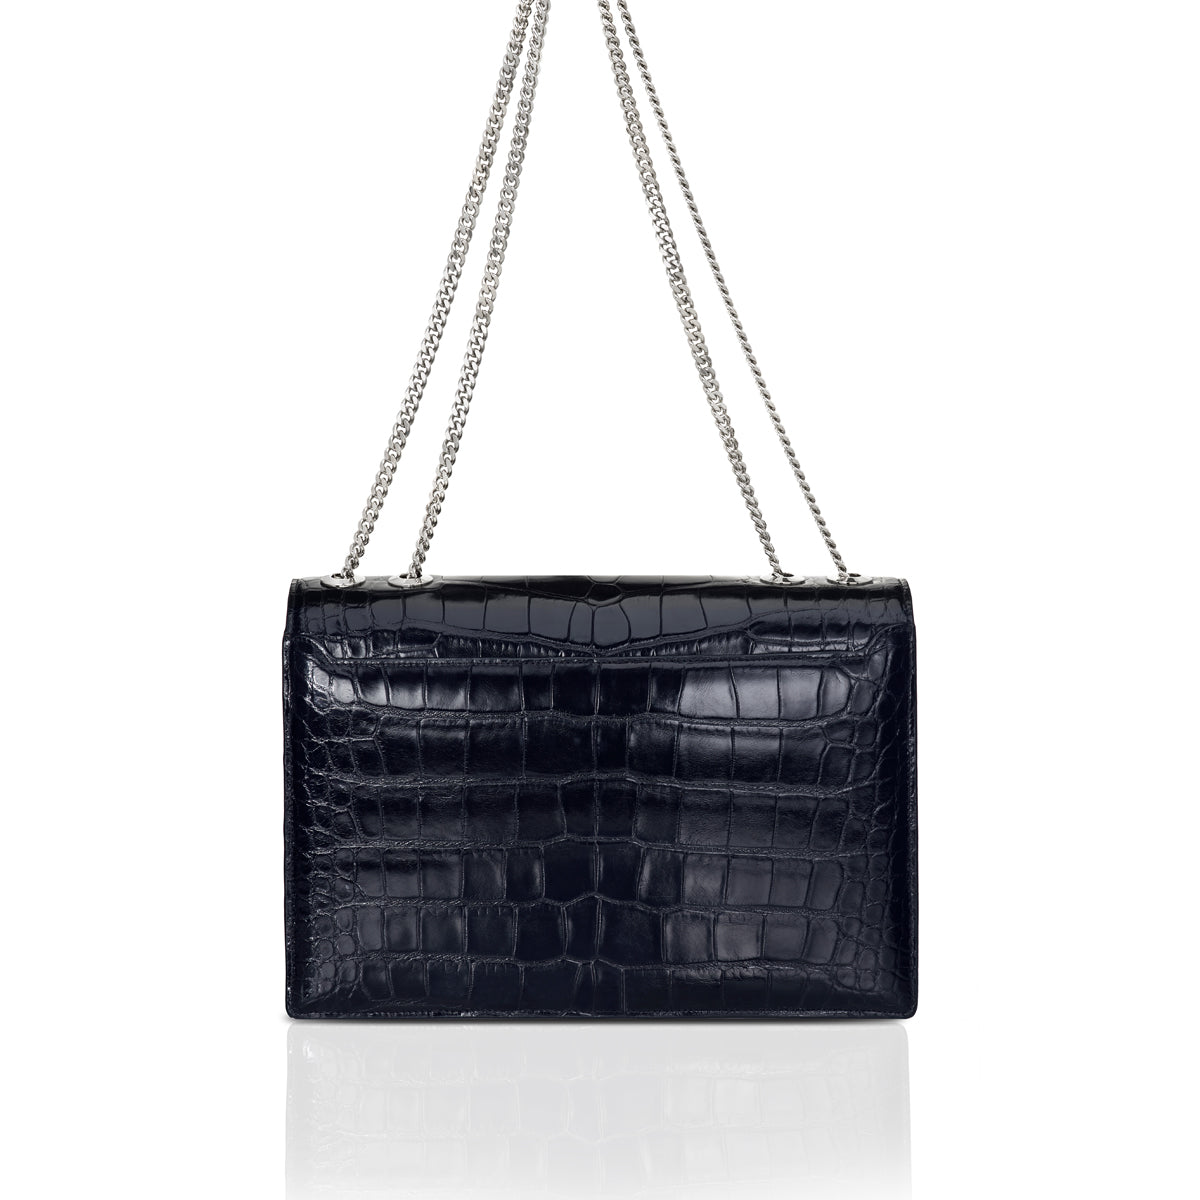 STALVEY Chained Shoulder Bag 3.0 Large in Black Alligator Front View